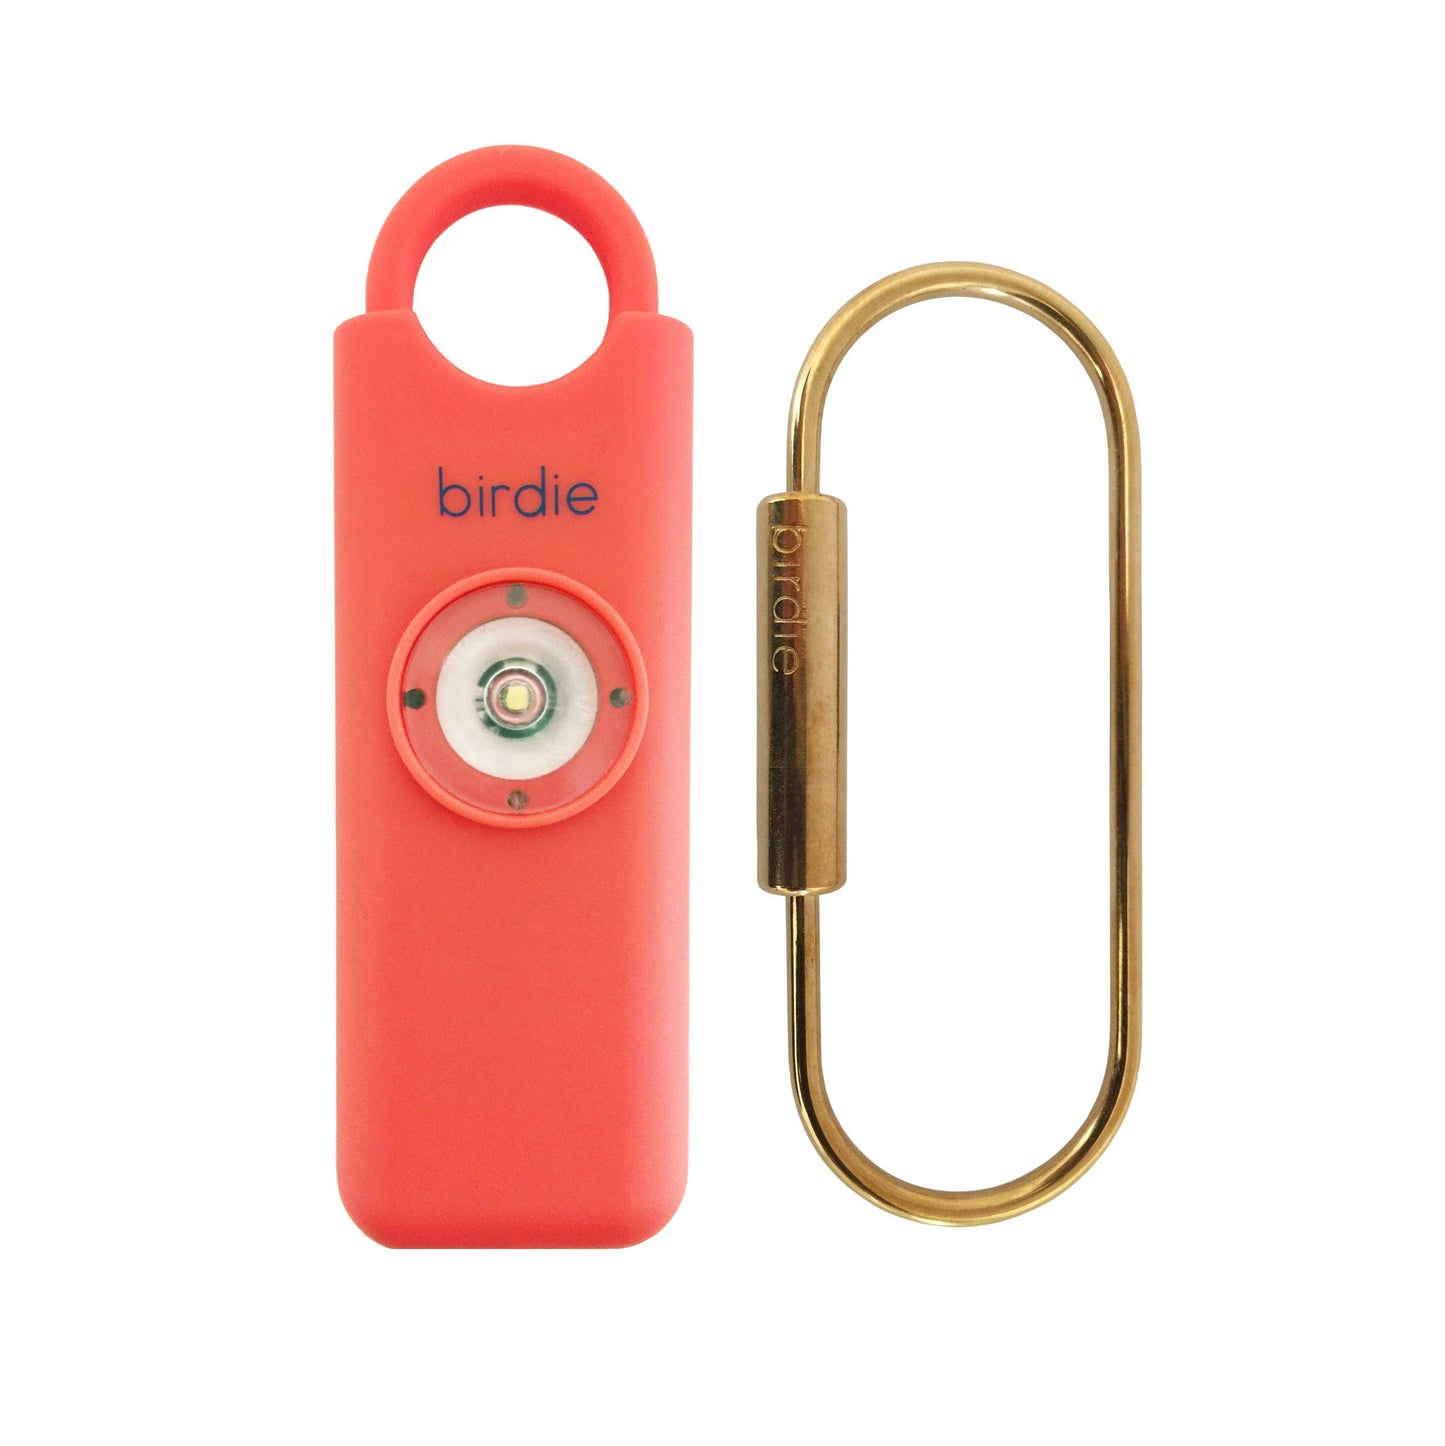 She's Birdie - She's Birdie Personal Safety Alarm: Single / Metallic Red